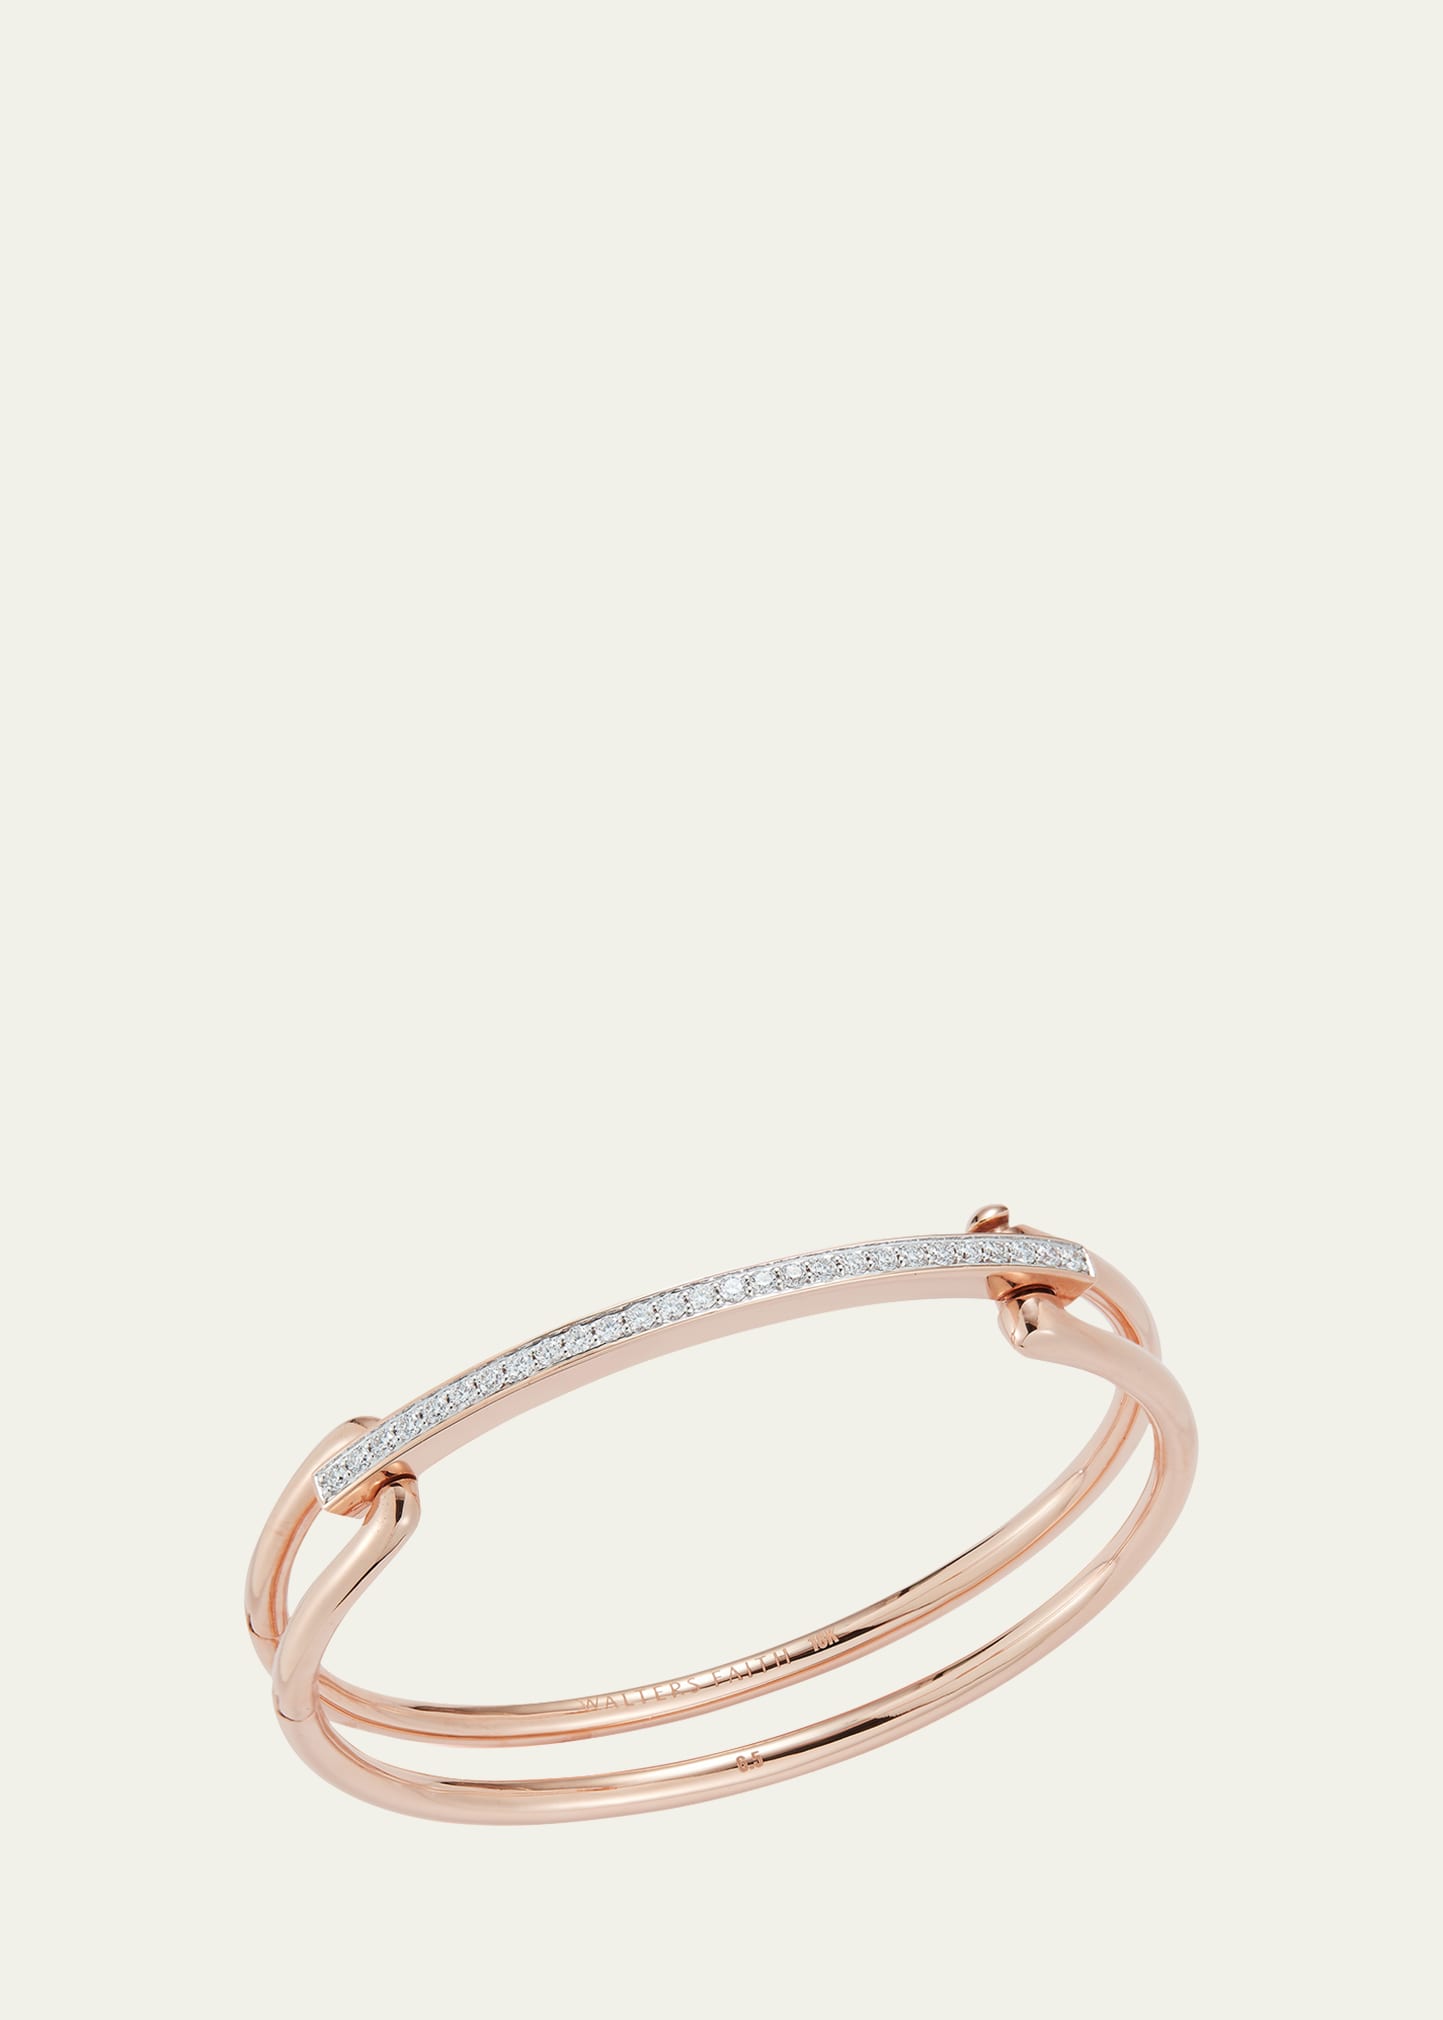 Grant 18K Rose Gold Elongated Link Cuff Bracelet with Diamond Bar, Size 6